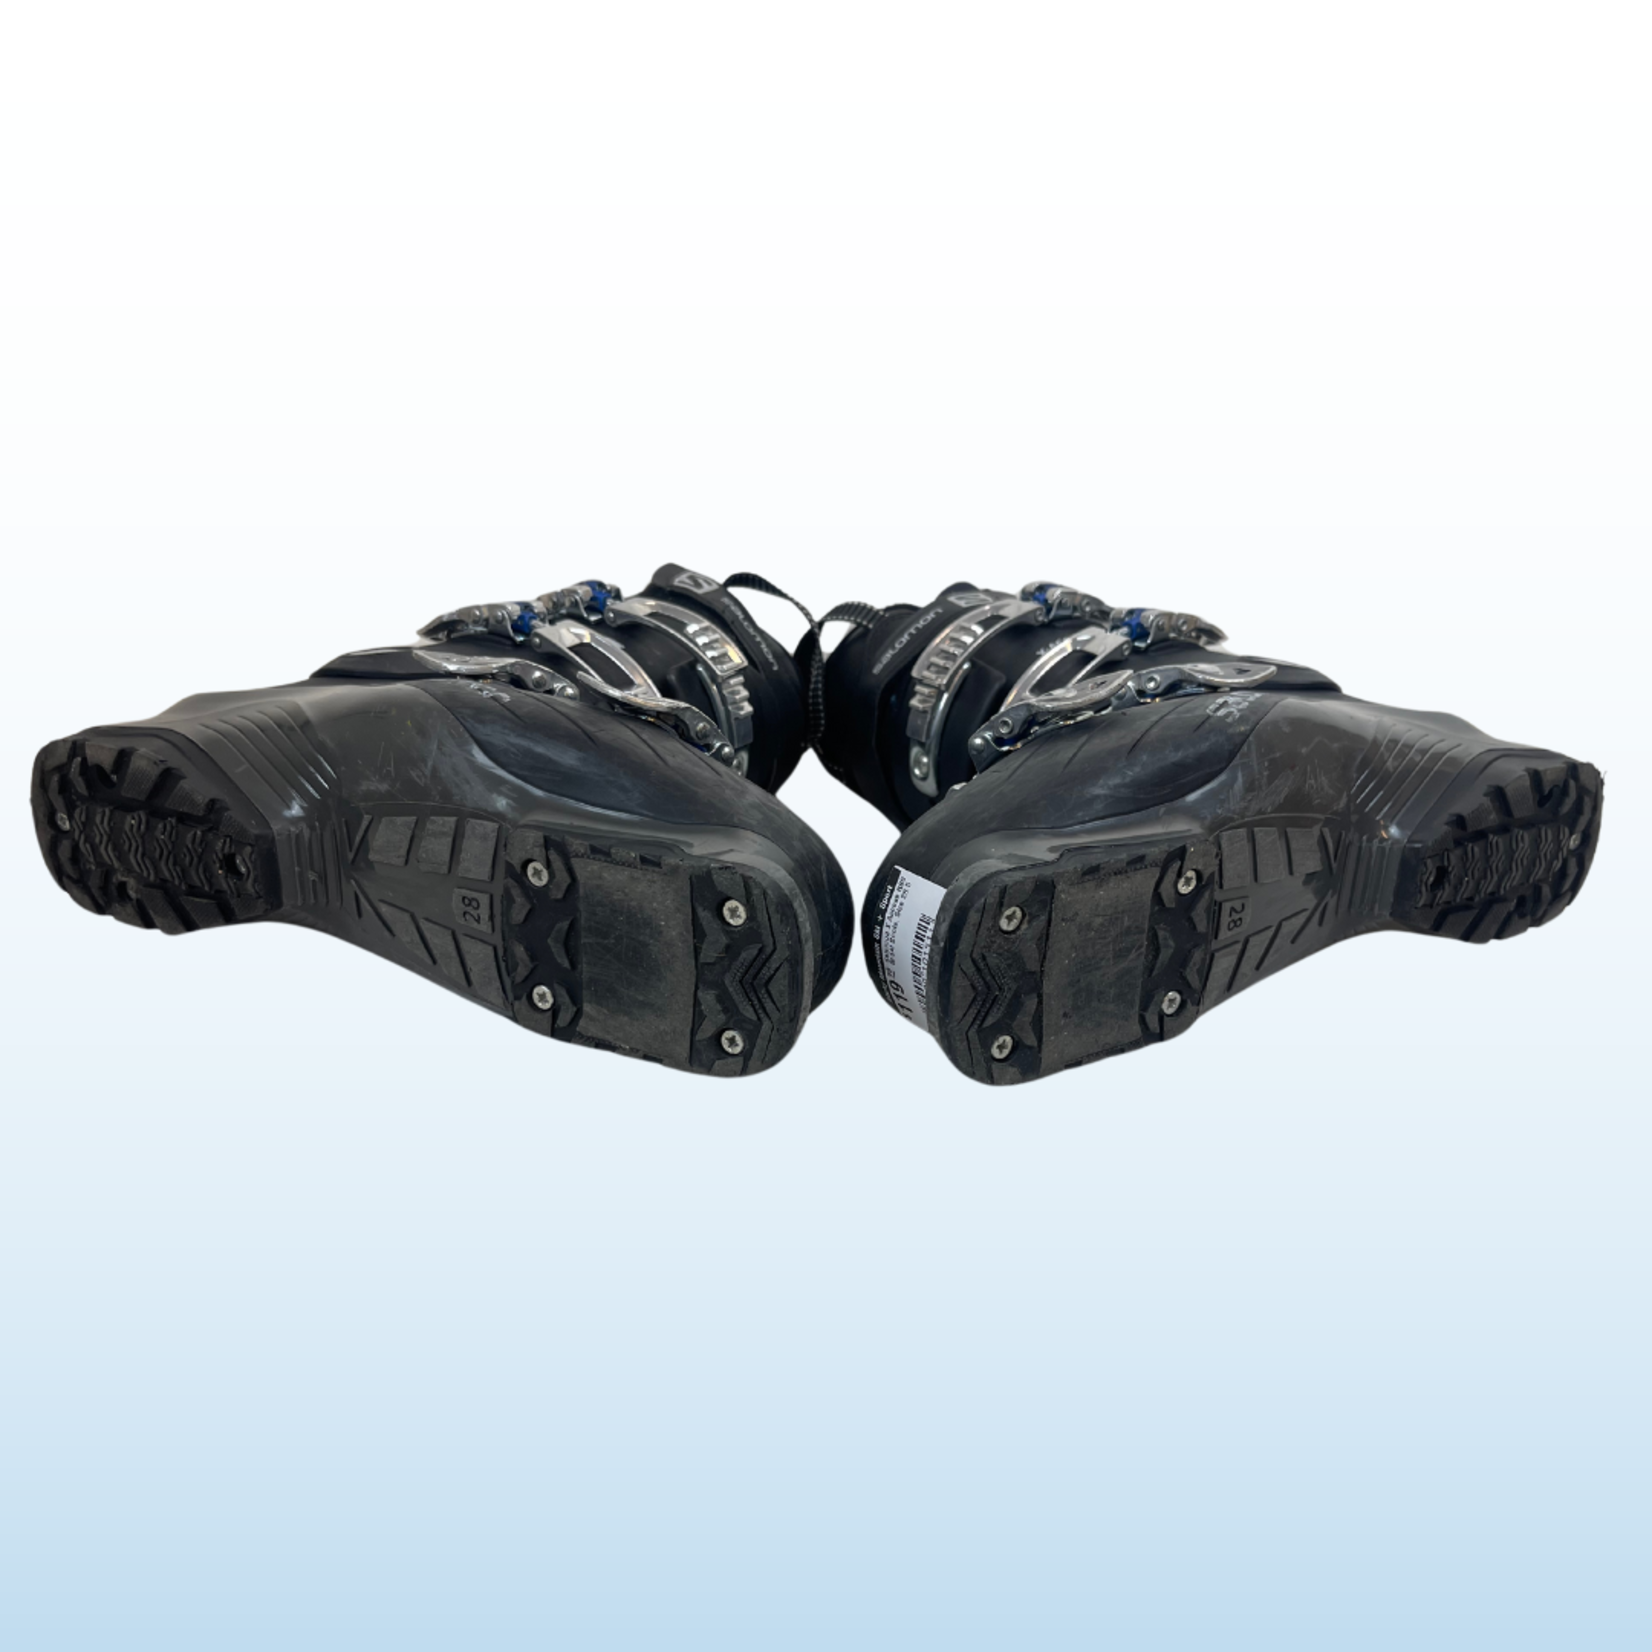 Salomon Salomon X Access R80 W Ski Boots, Size 26.5